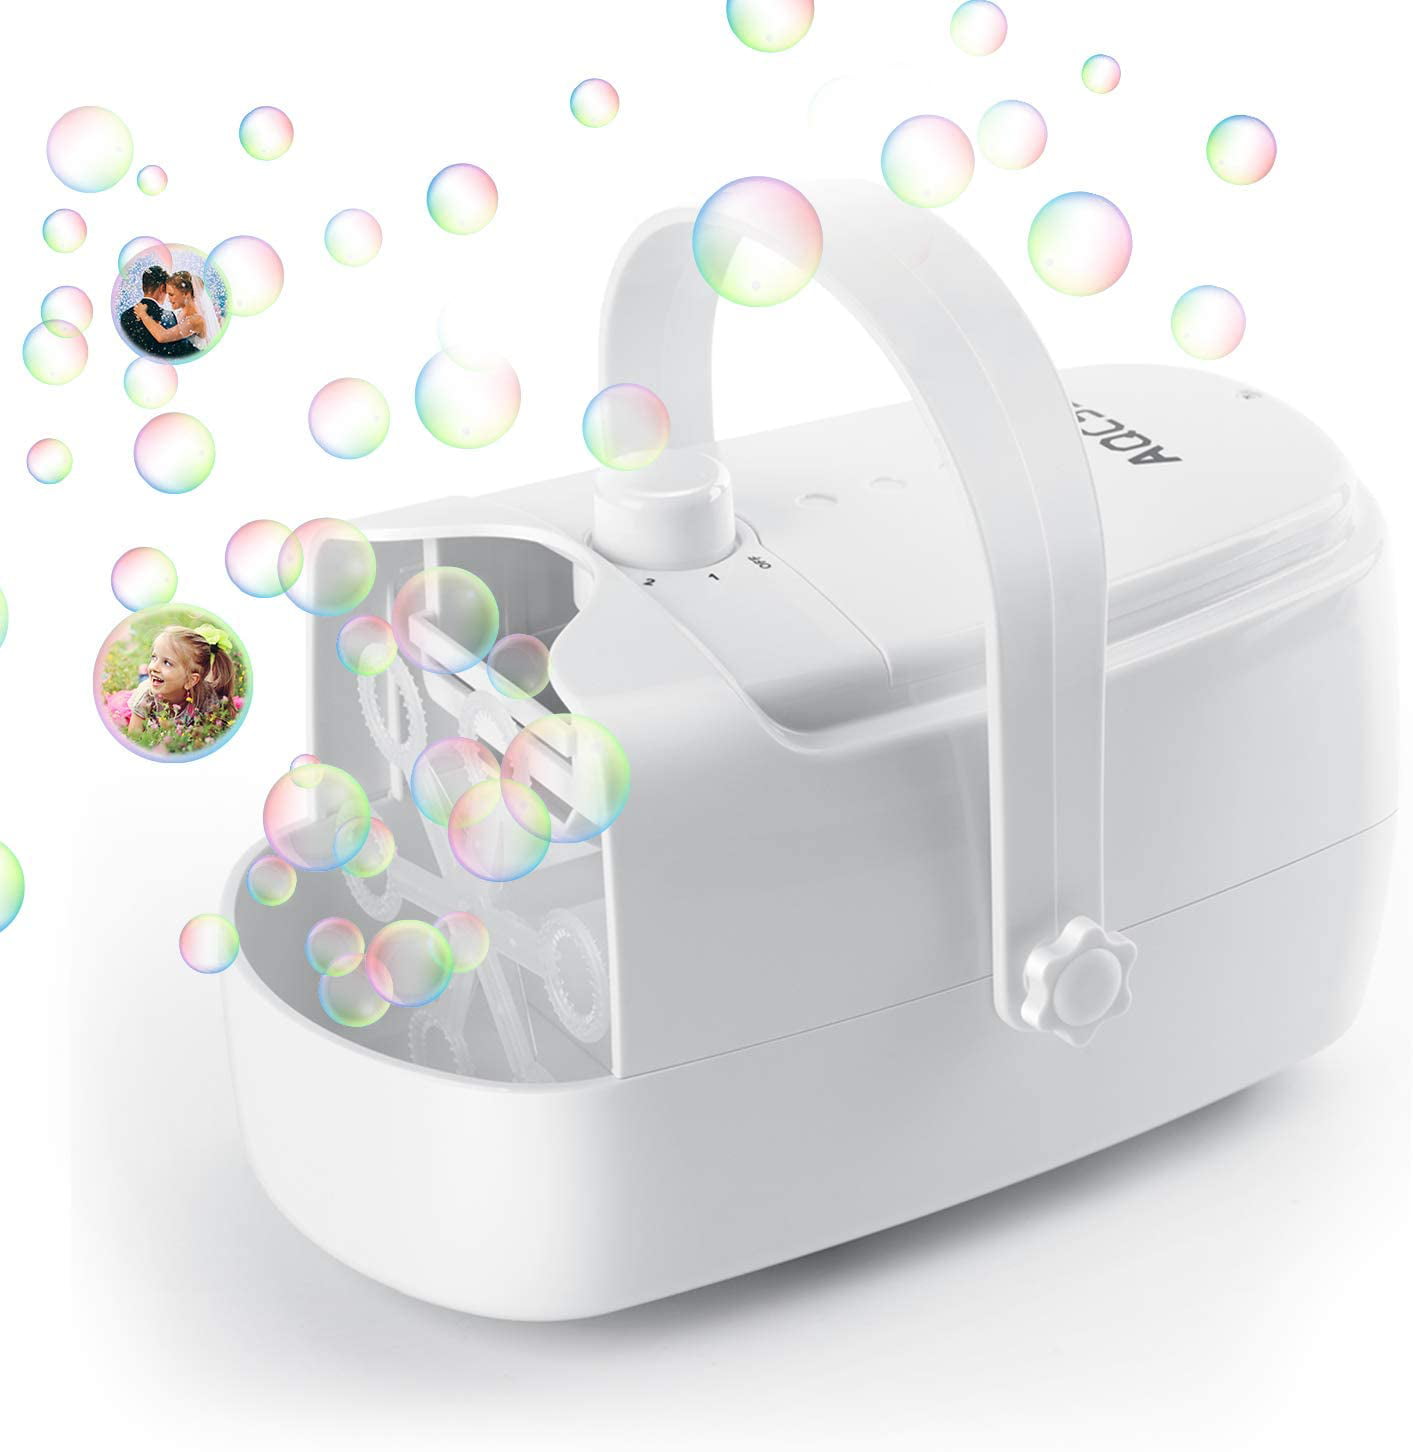 Details about   Automatic Rechargeable Bubble Machine Portable Bubbles Blower Kid Indoor Outdoor